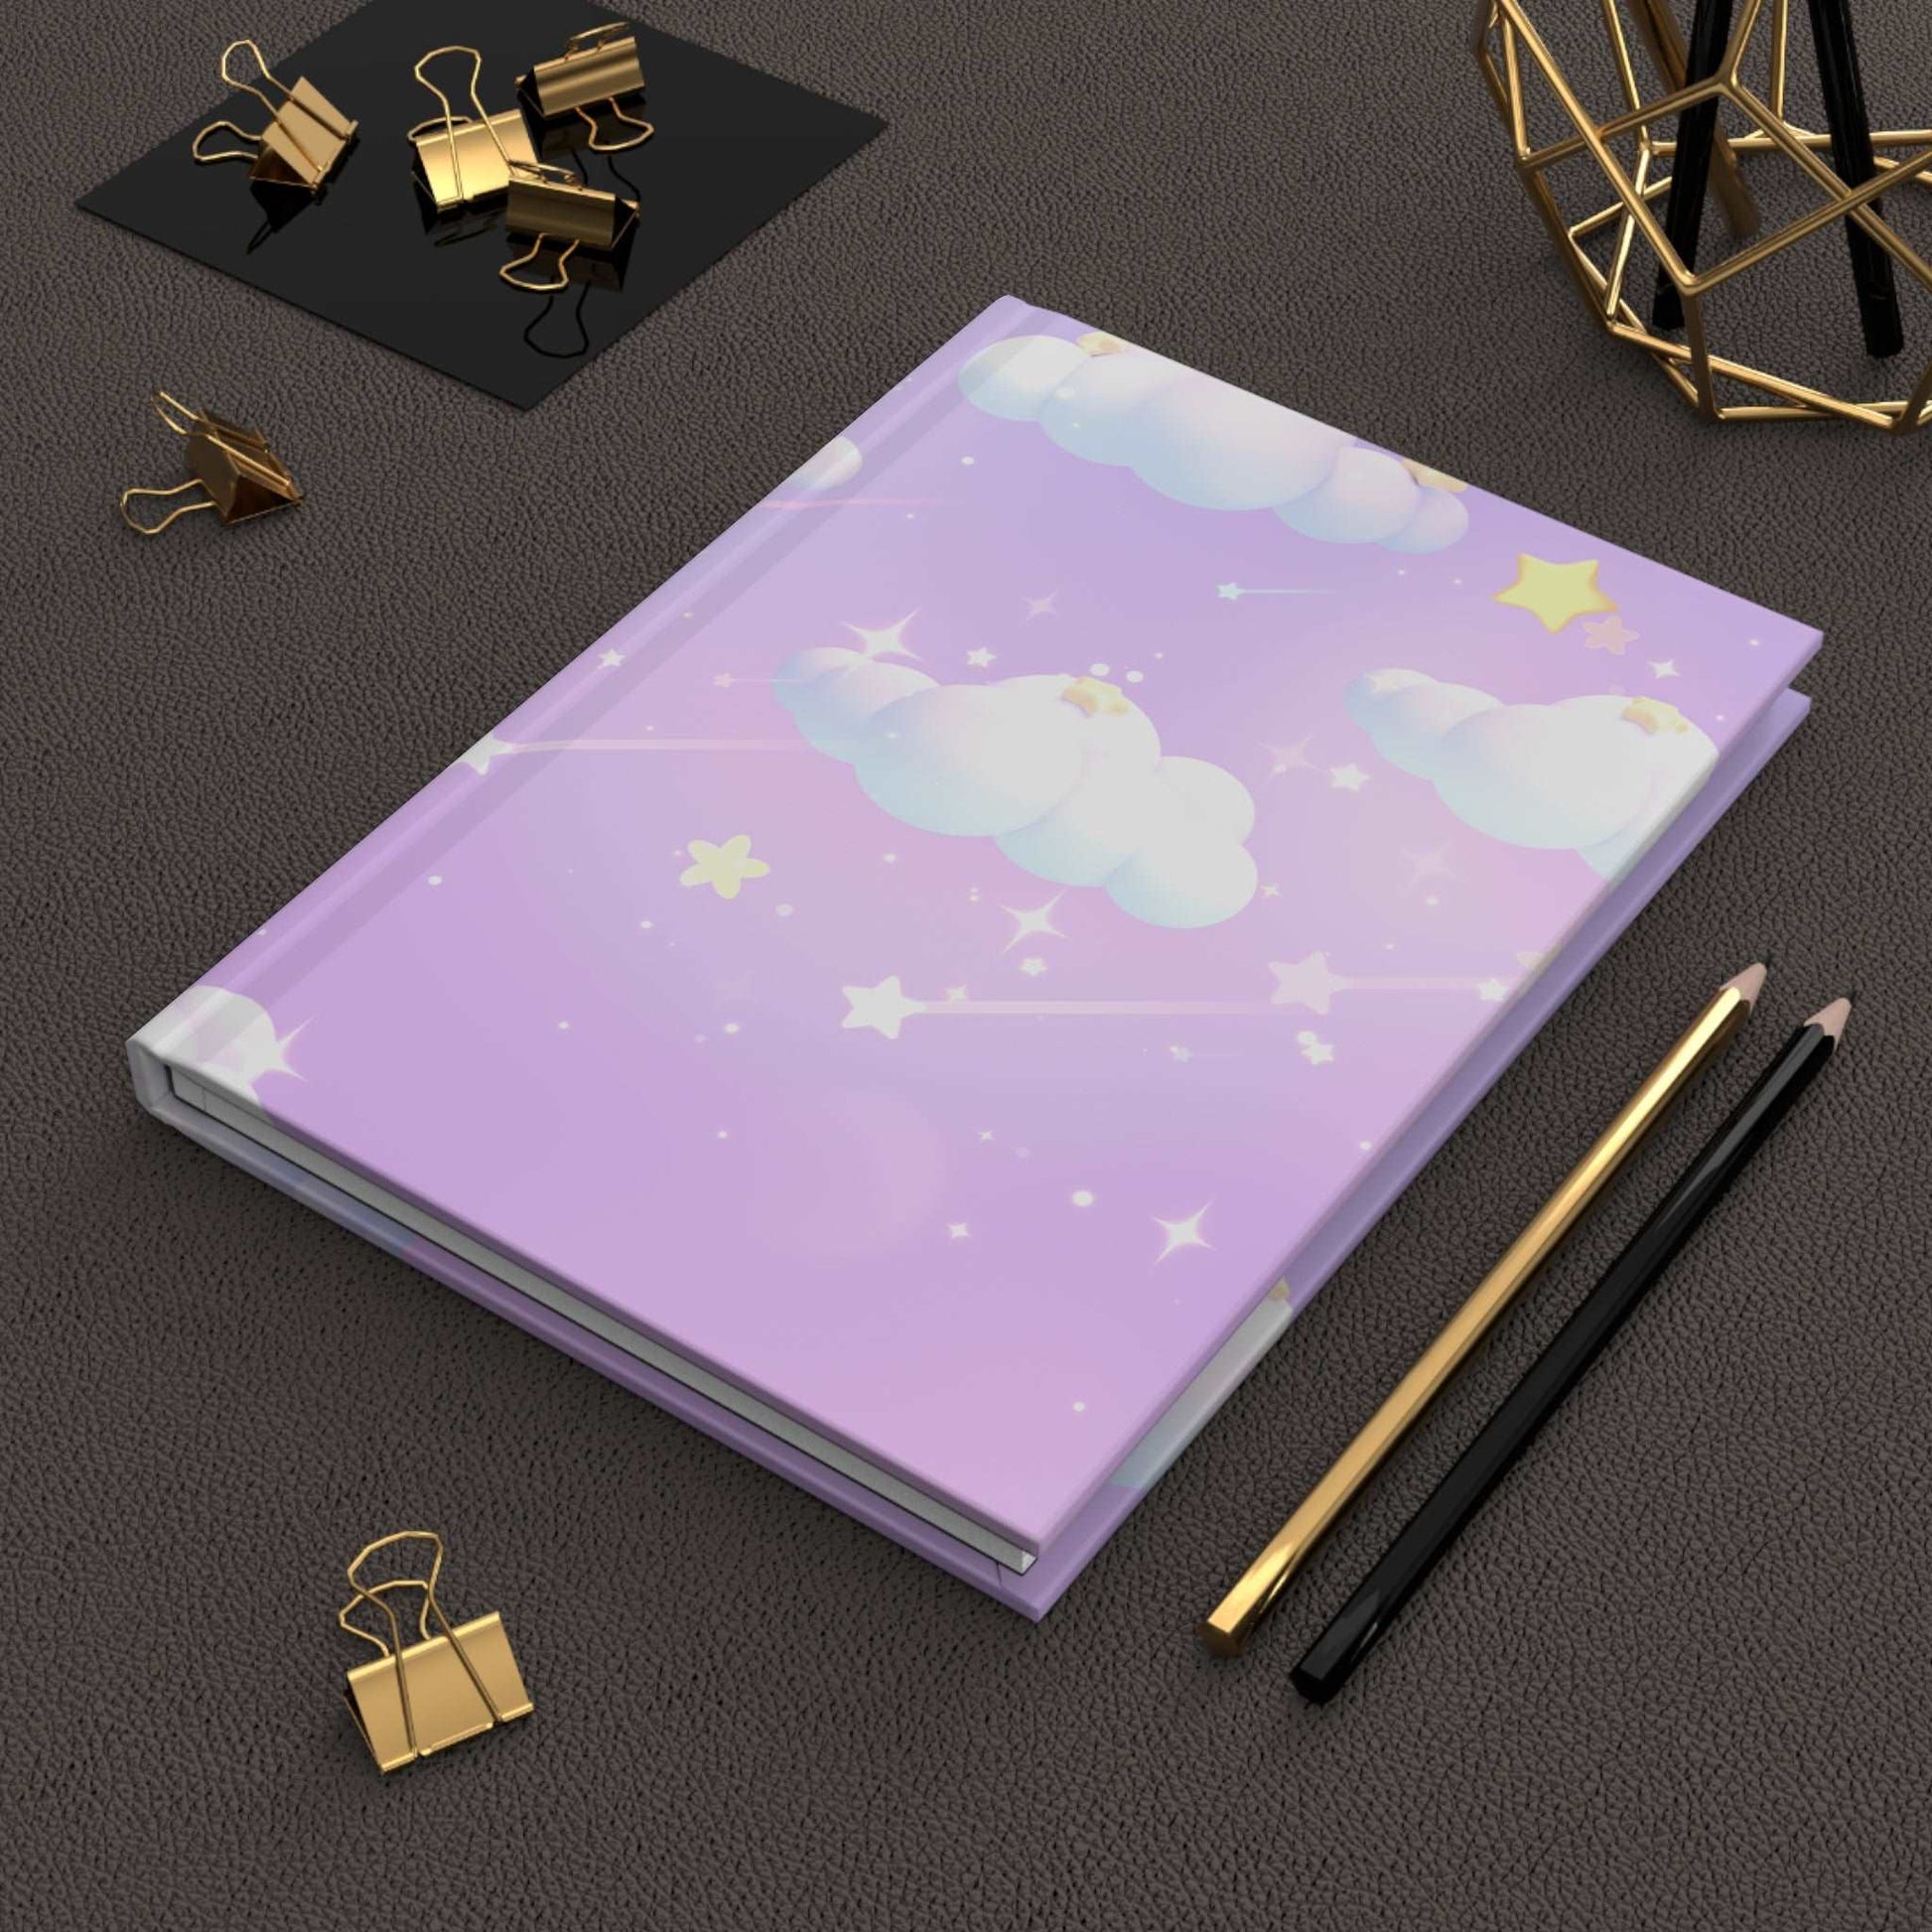 Cloudy Lavender Skies Hardcover Matte Journal